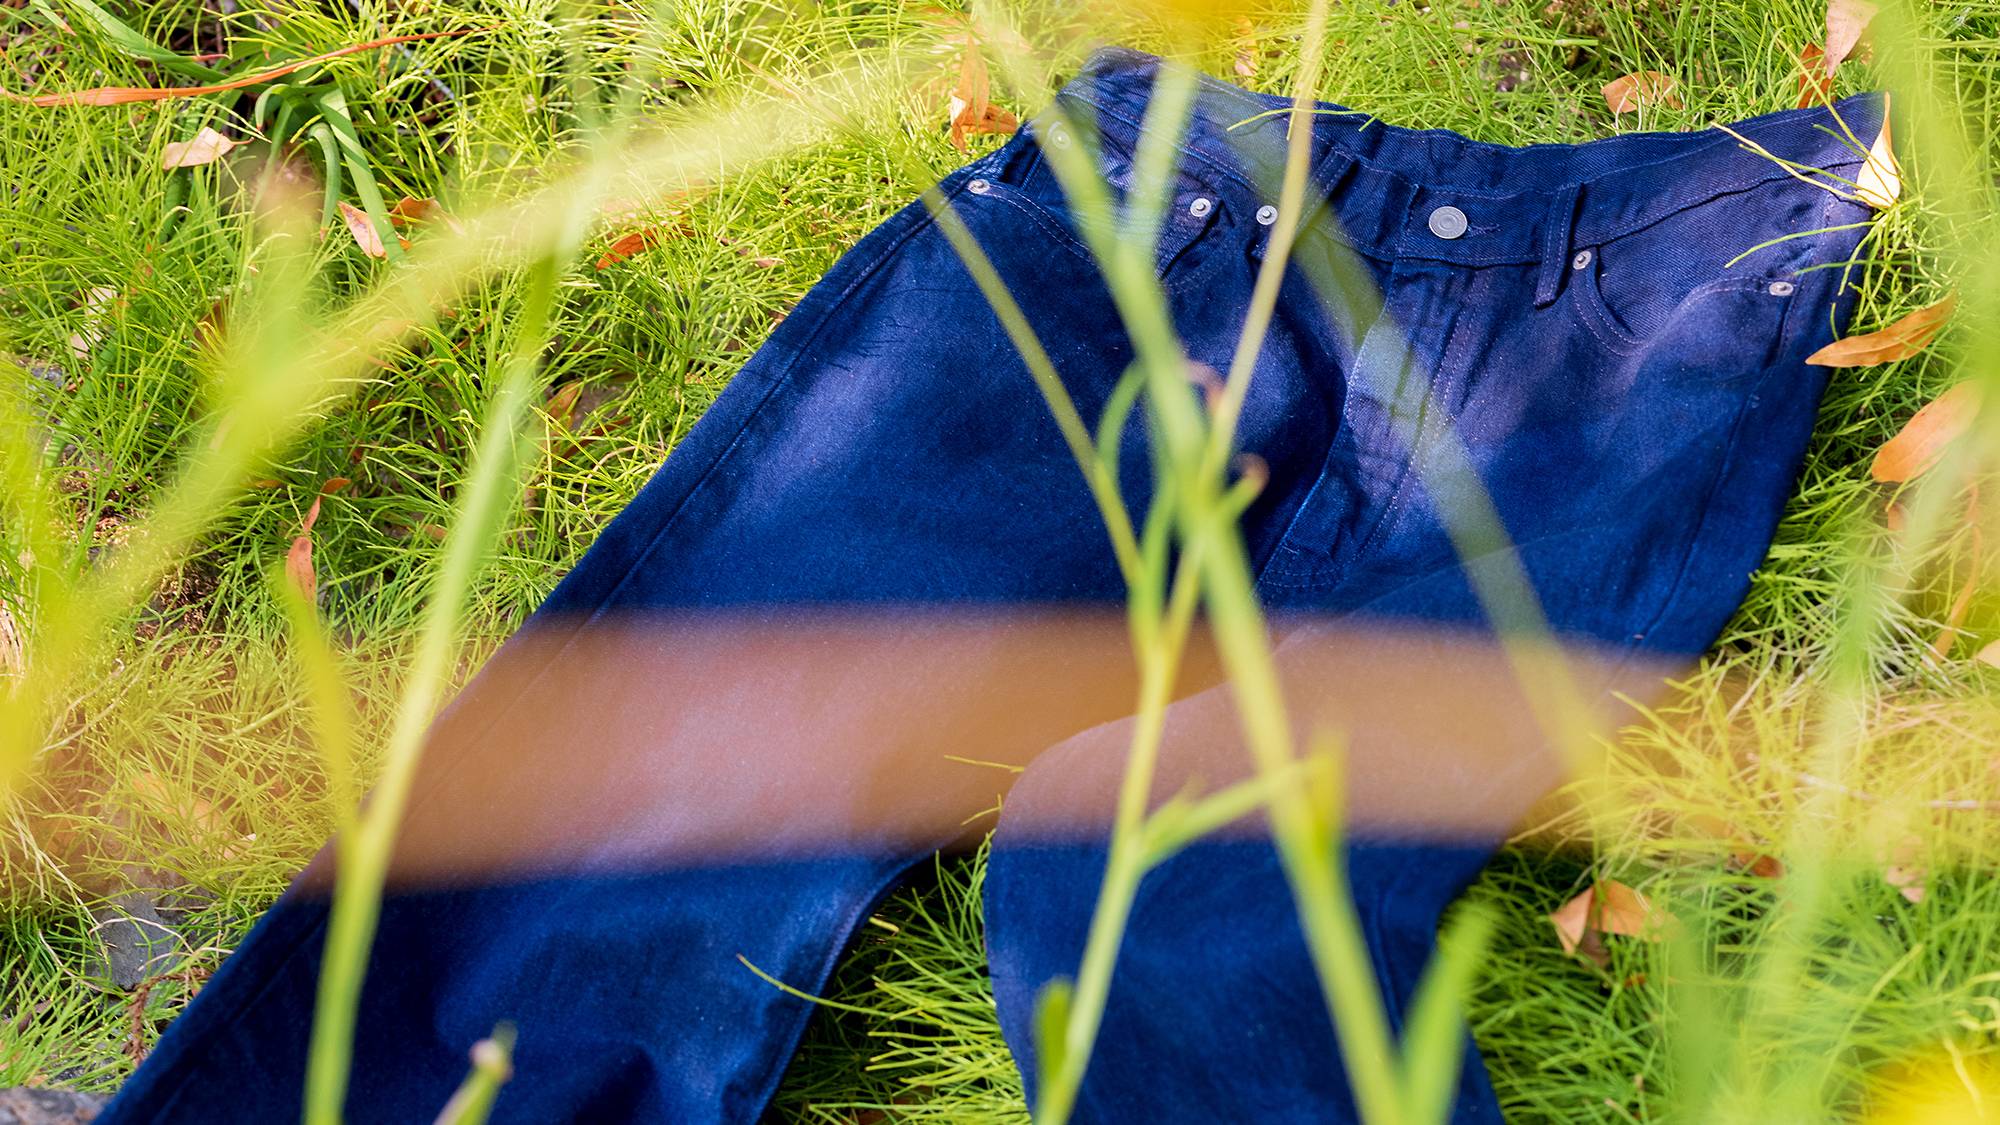 Levi's denim jeans dark blue wash laid down in a field of tall grass